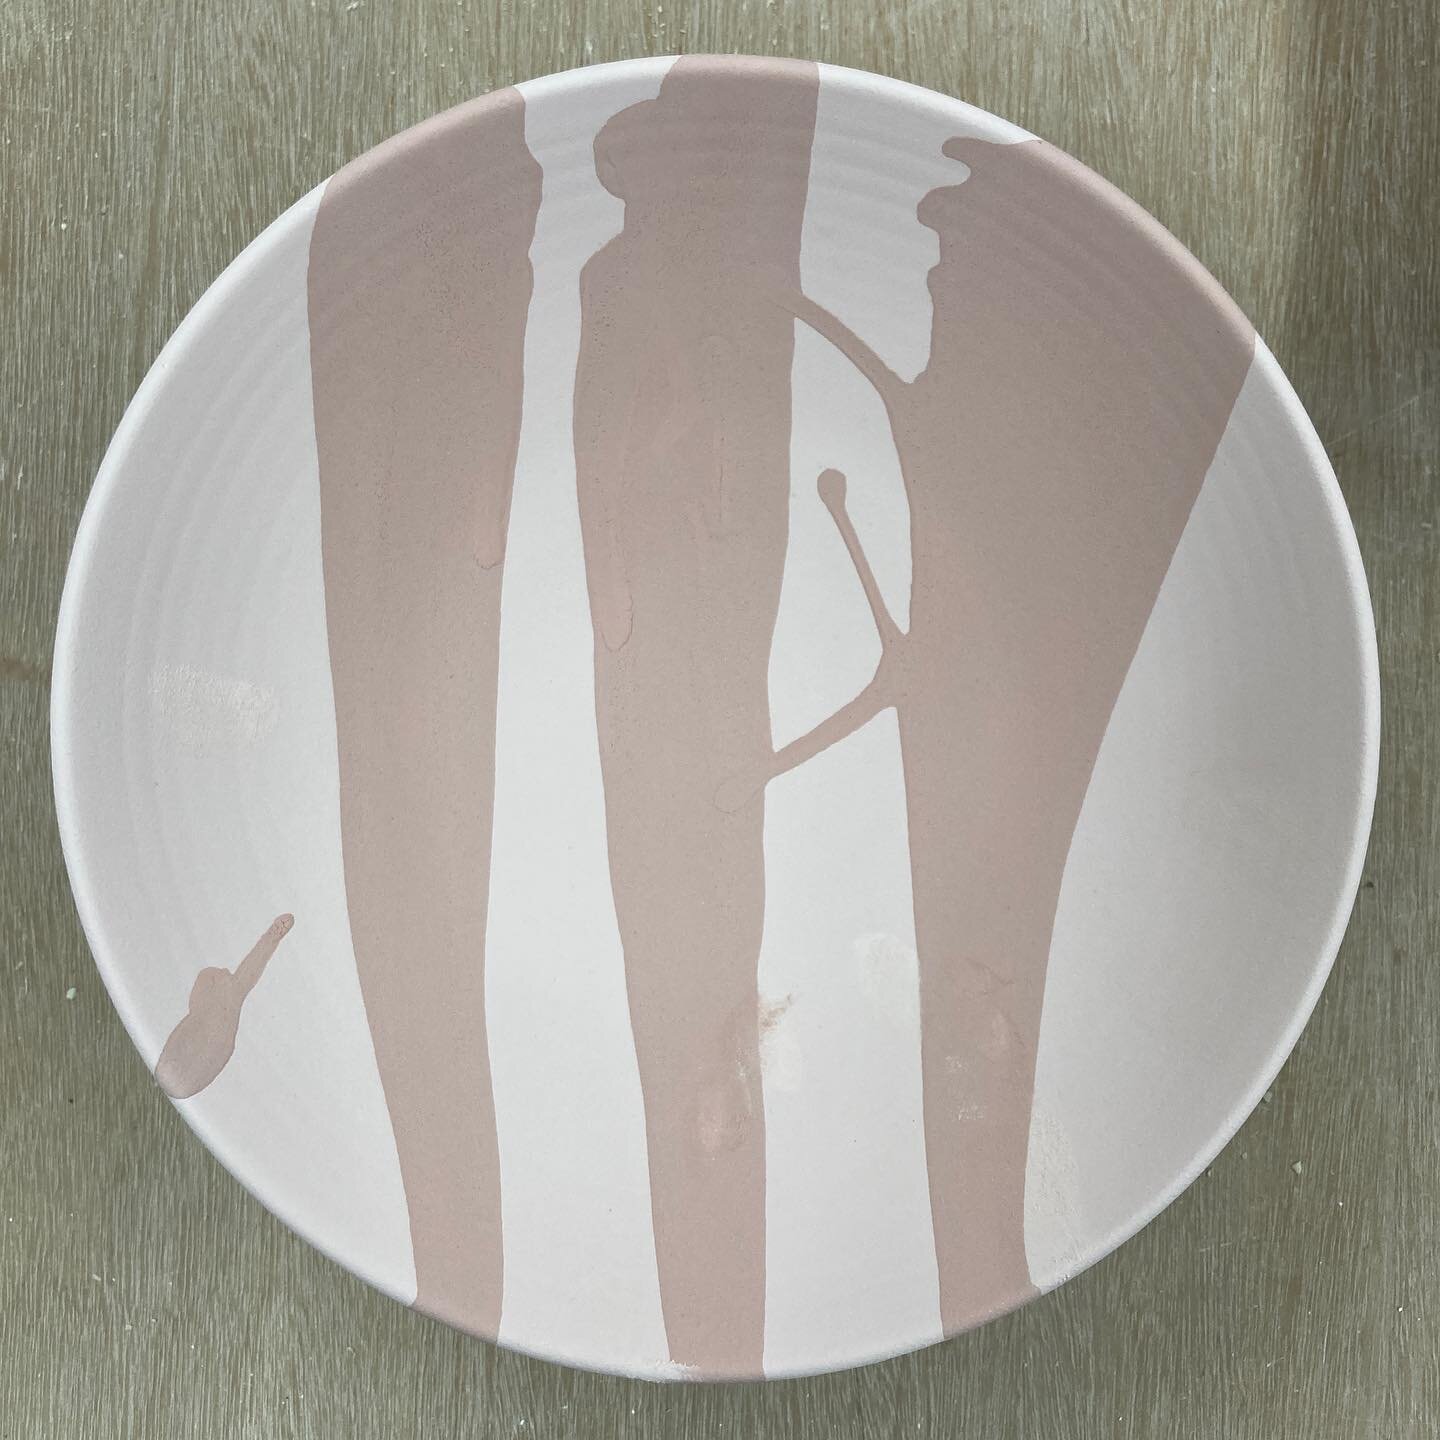 Before and After. 
#michael_taylor_ceramics #contemporaryceramics #wheelthrown #modernceramics #tableware #studiopottery #studioceramics #contemporary ceramics #britishcraft #artoninstagram #pottersofinstagram #southwestengland #coffeemugs #tableware